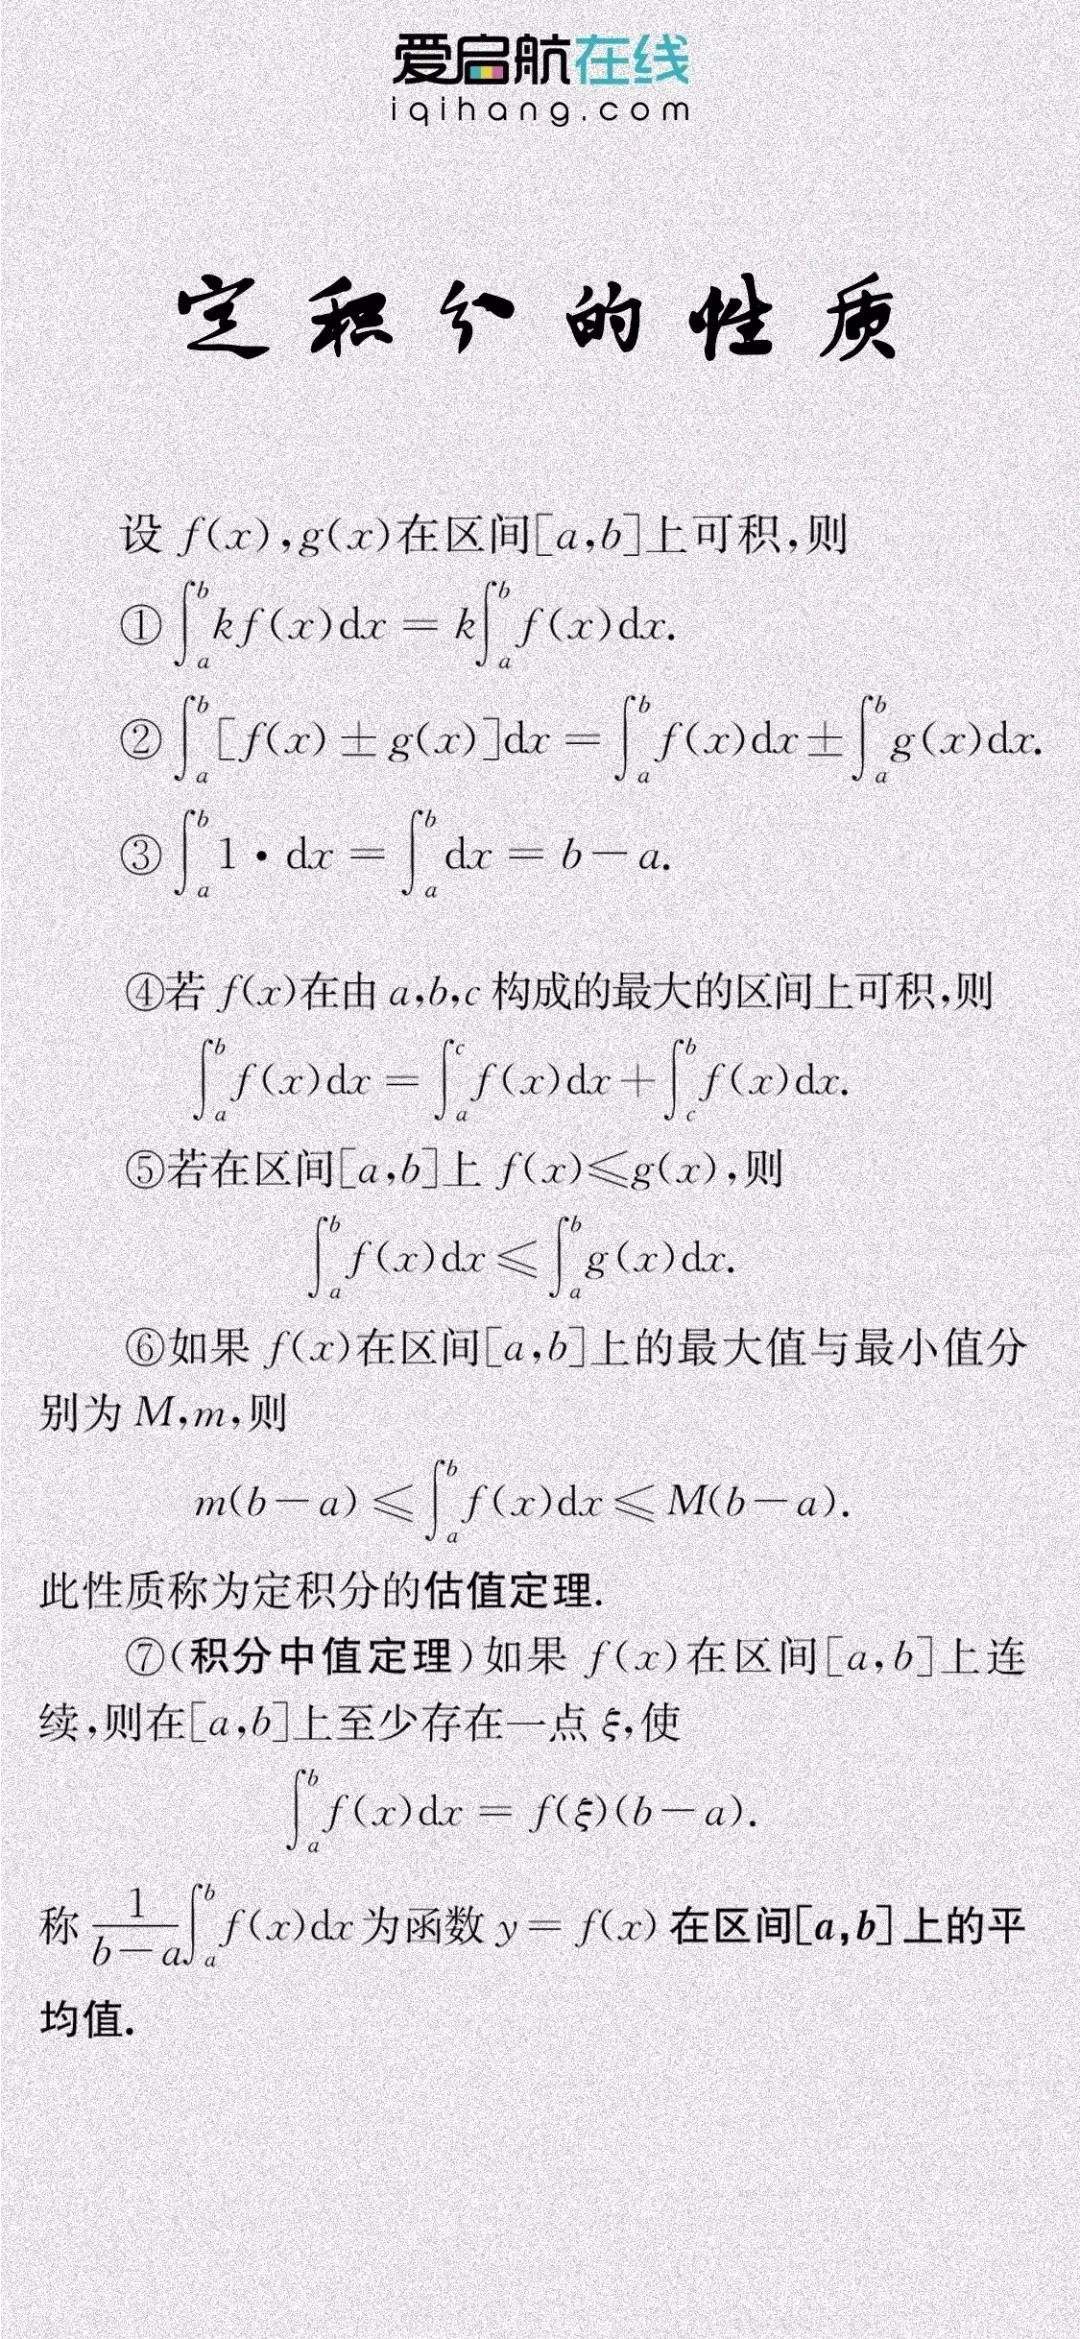 Japan Image 数学公式桌布